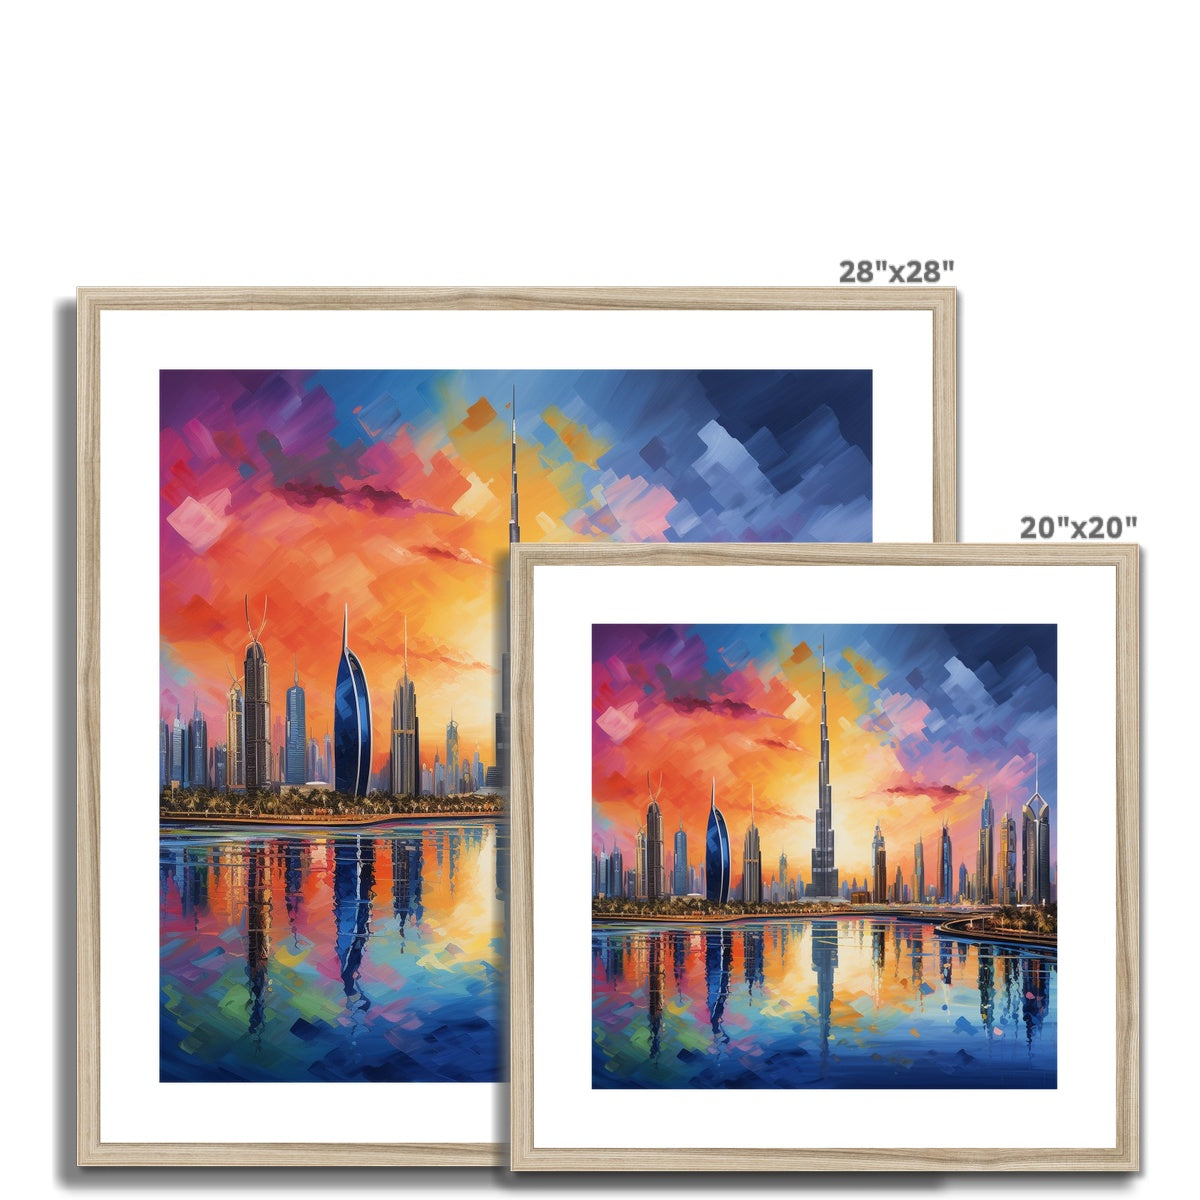 Downtown, Dubai Framed & Mounted Print